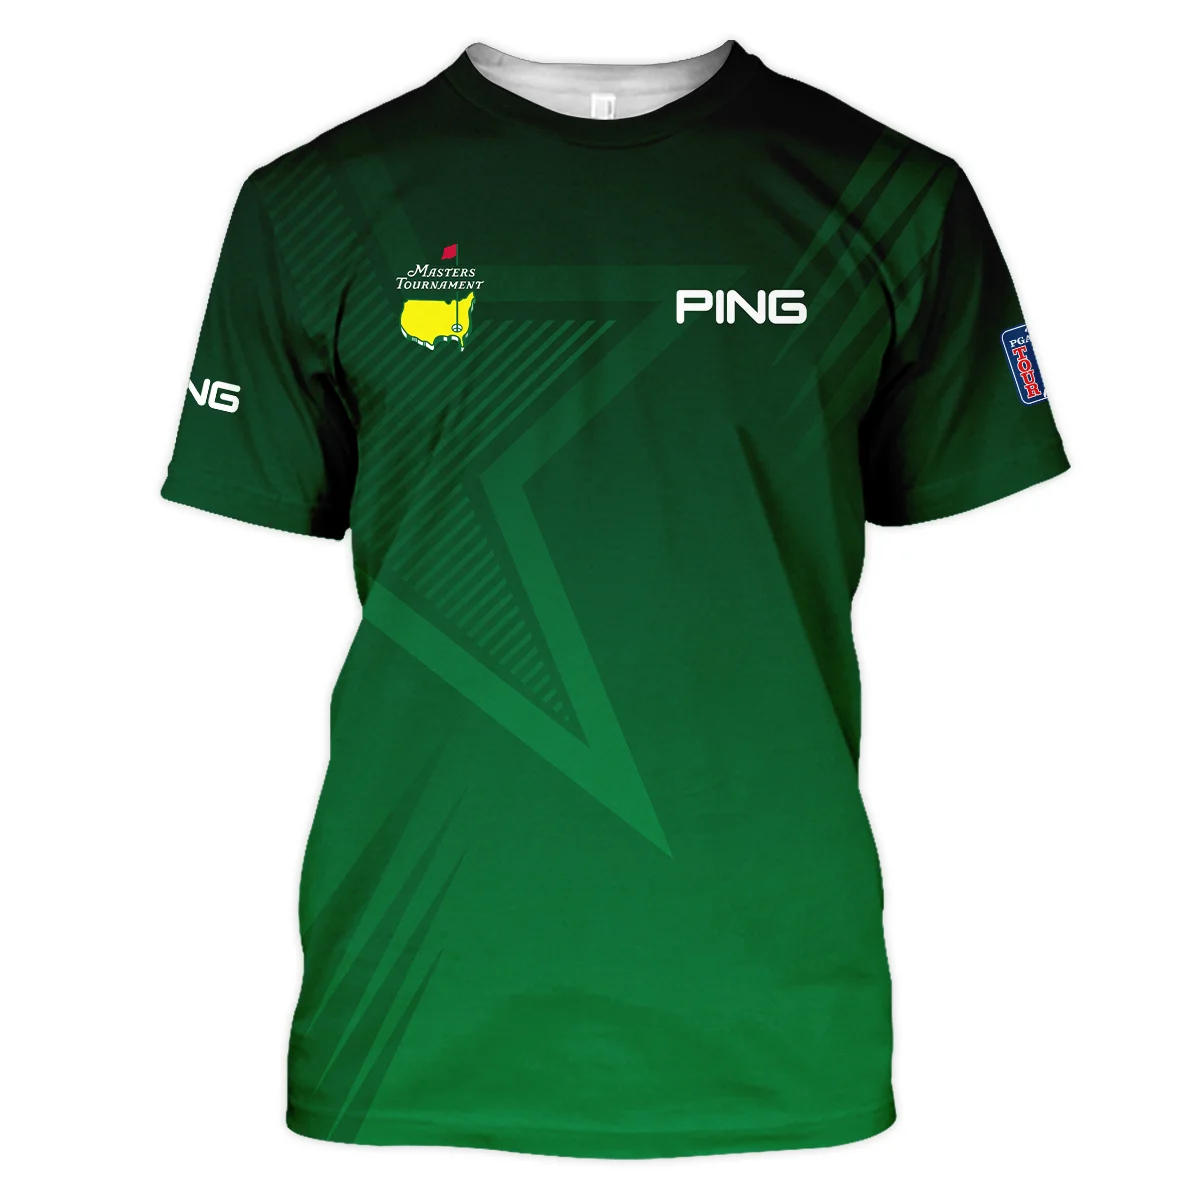 Ping Masters Tournament Unisex T-Shirt Dark Green Gradient Star Pattern Golf Sports T-Shirt